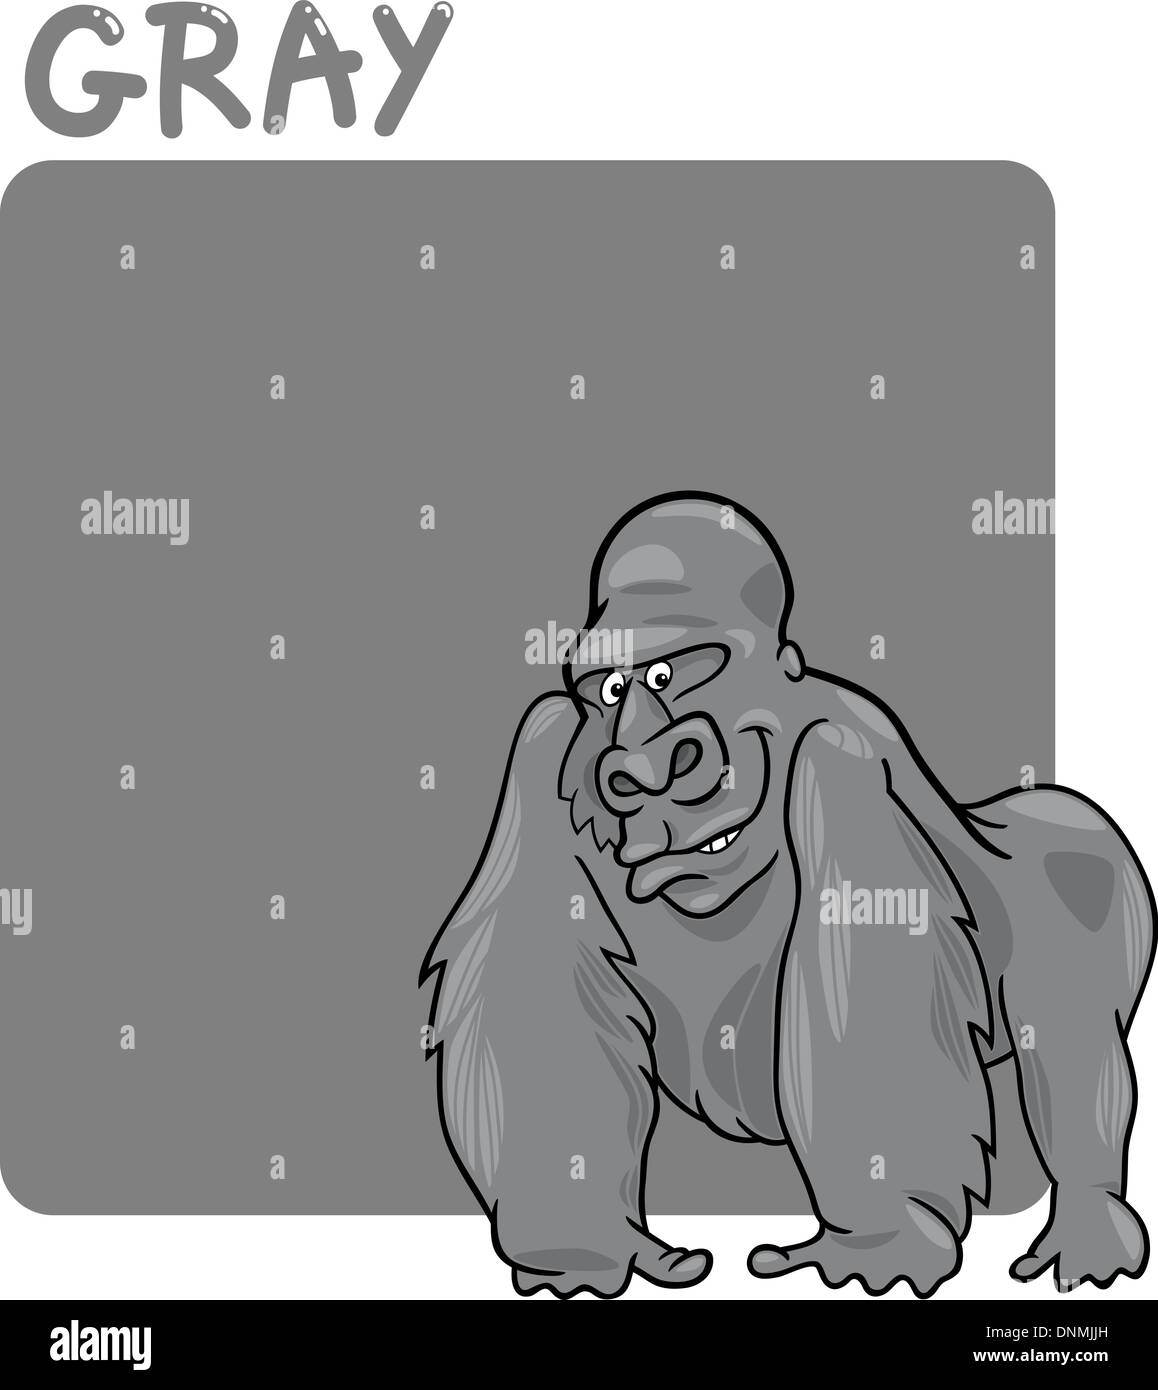 https://c8.alamy.com/comp/DNMJJH/cartoon-illustration-of-color-gray-and-gorilla-DNMJJH.jpg